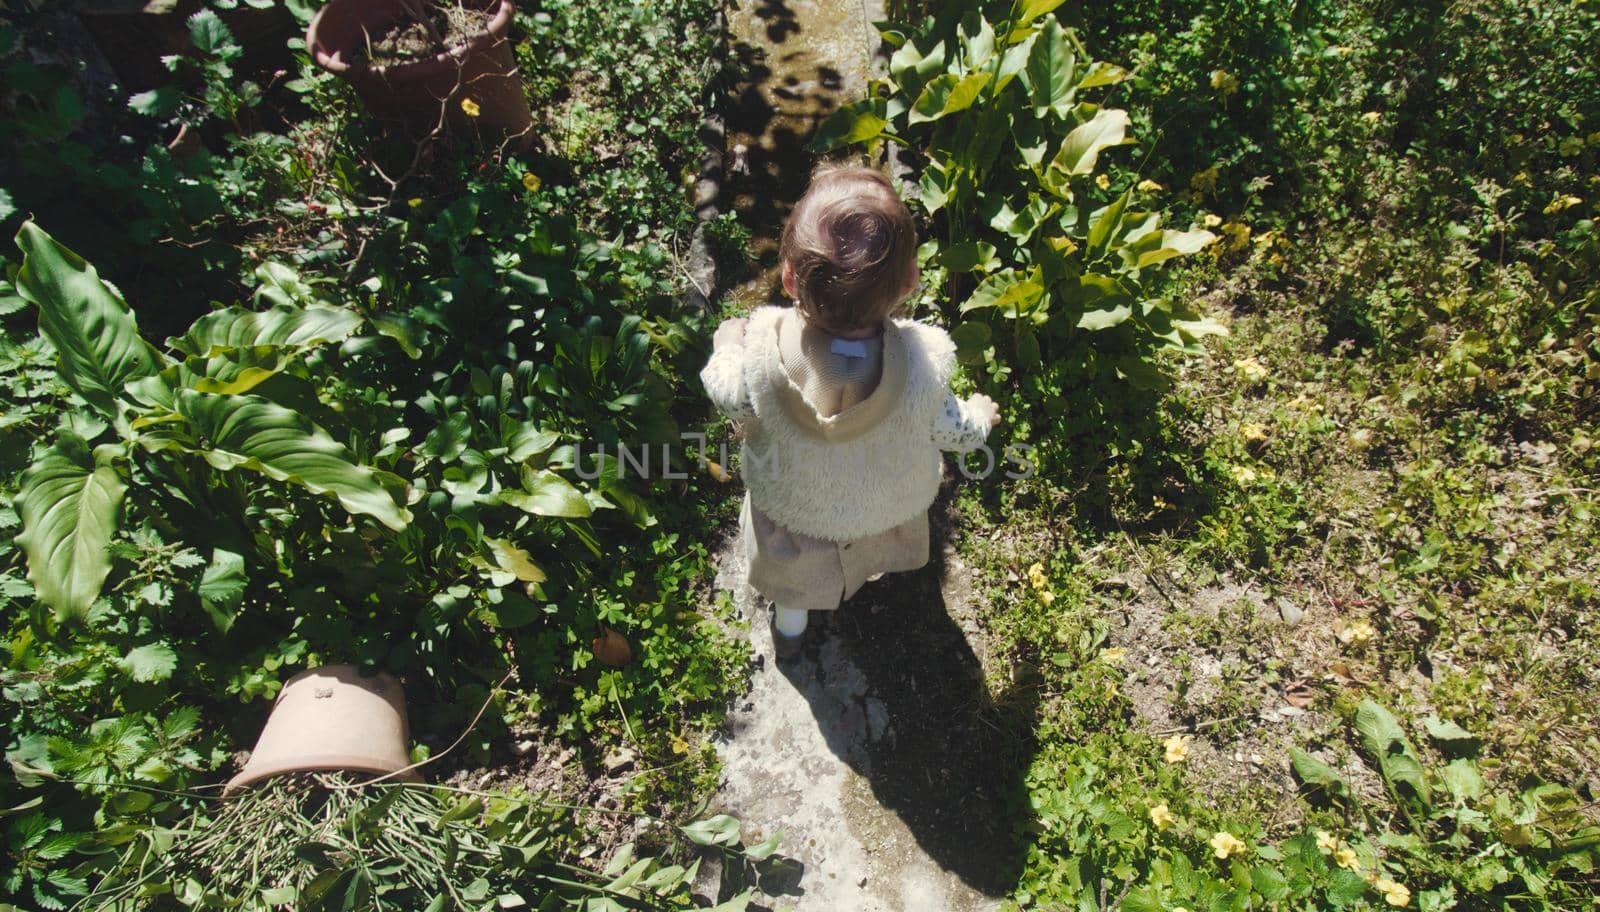 Baby girl walking down an overgrown garden path by tennesseewitney